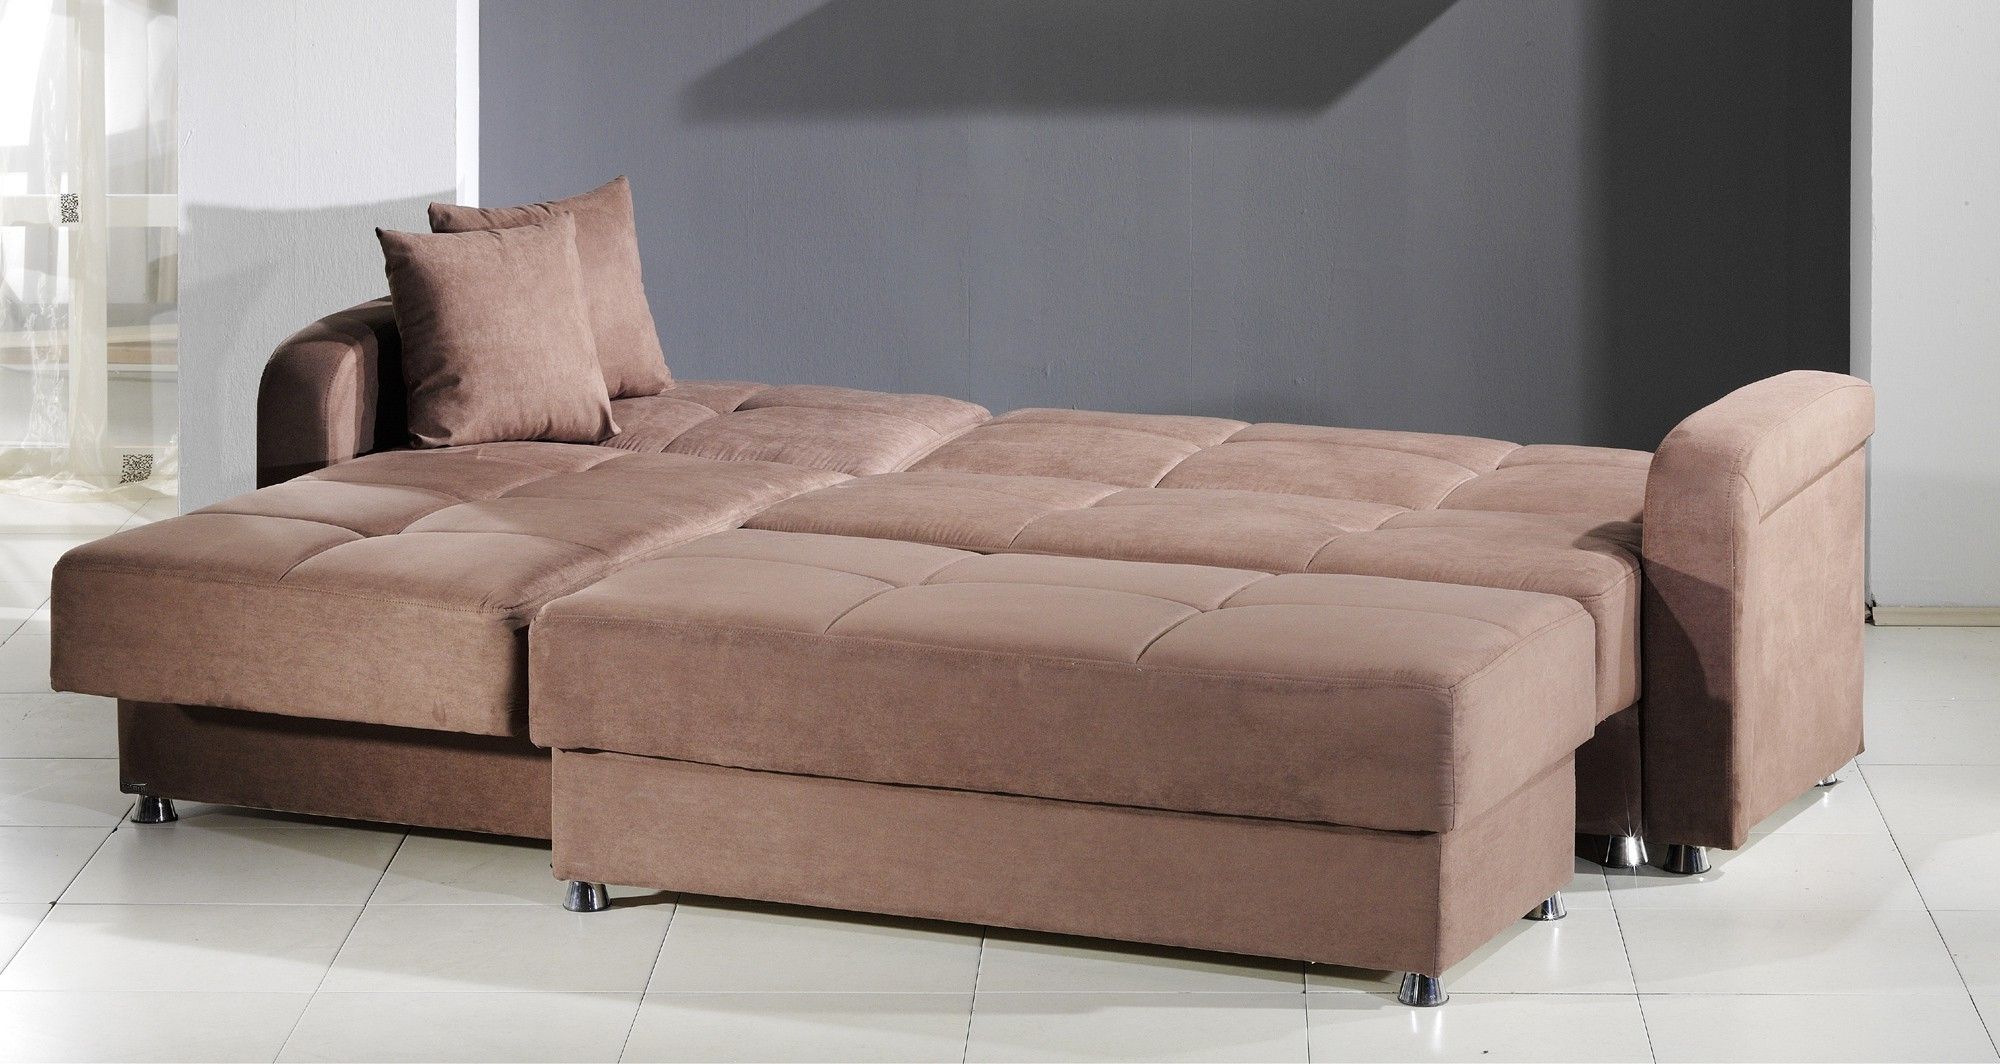 king size sofa bed amazon